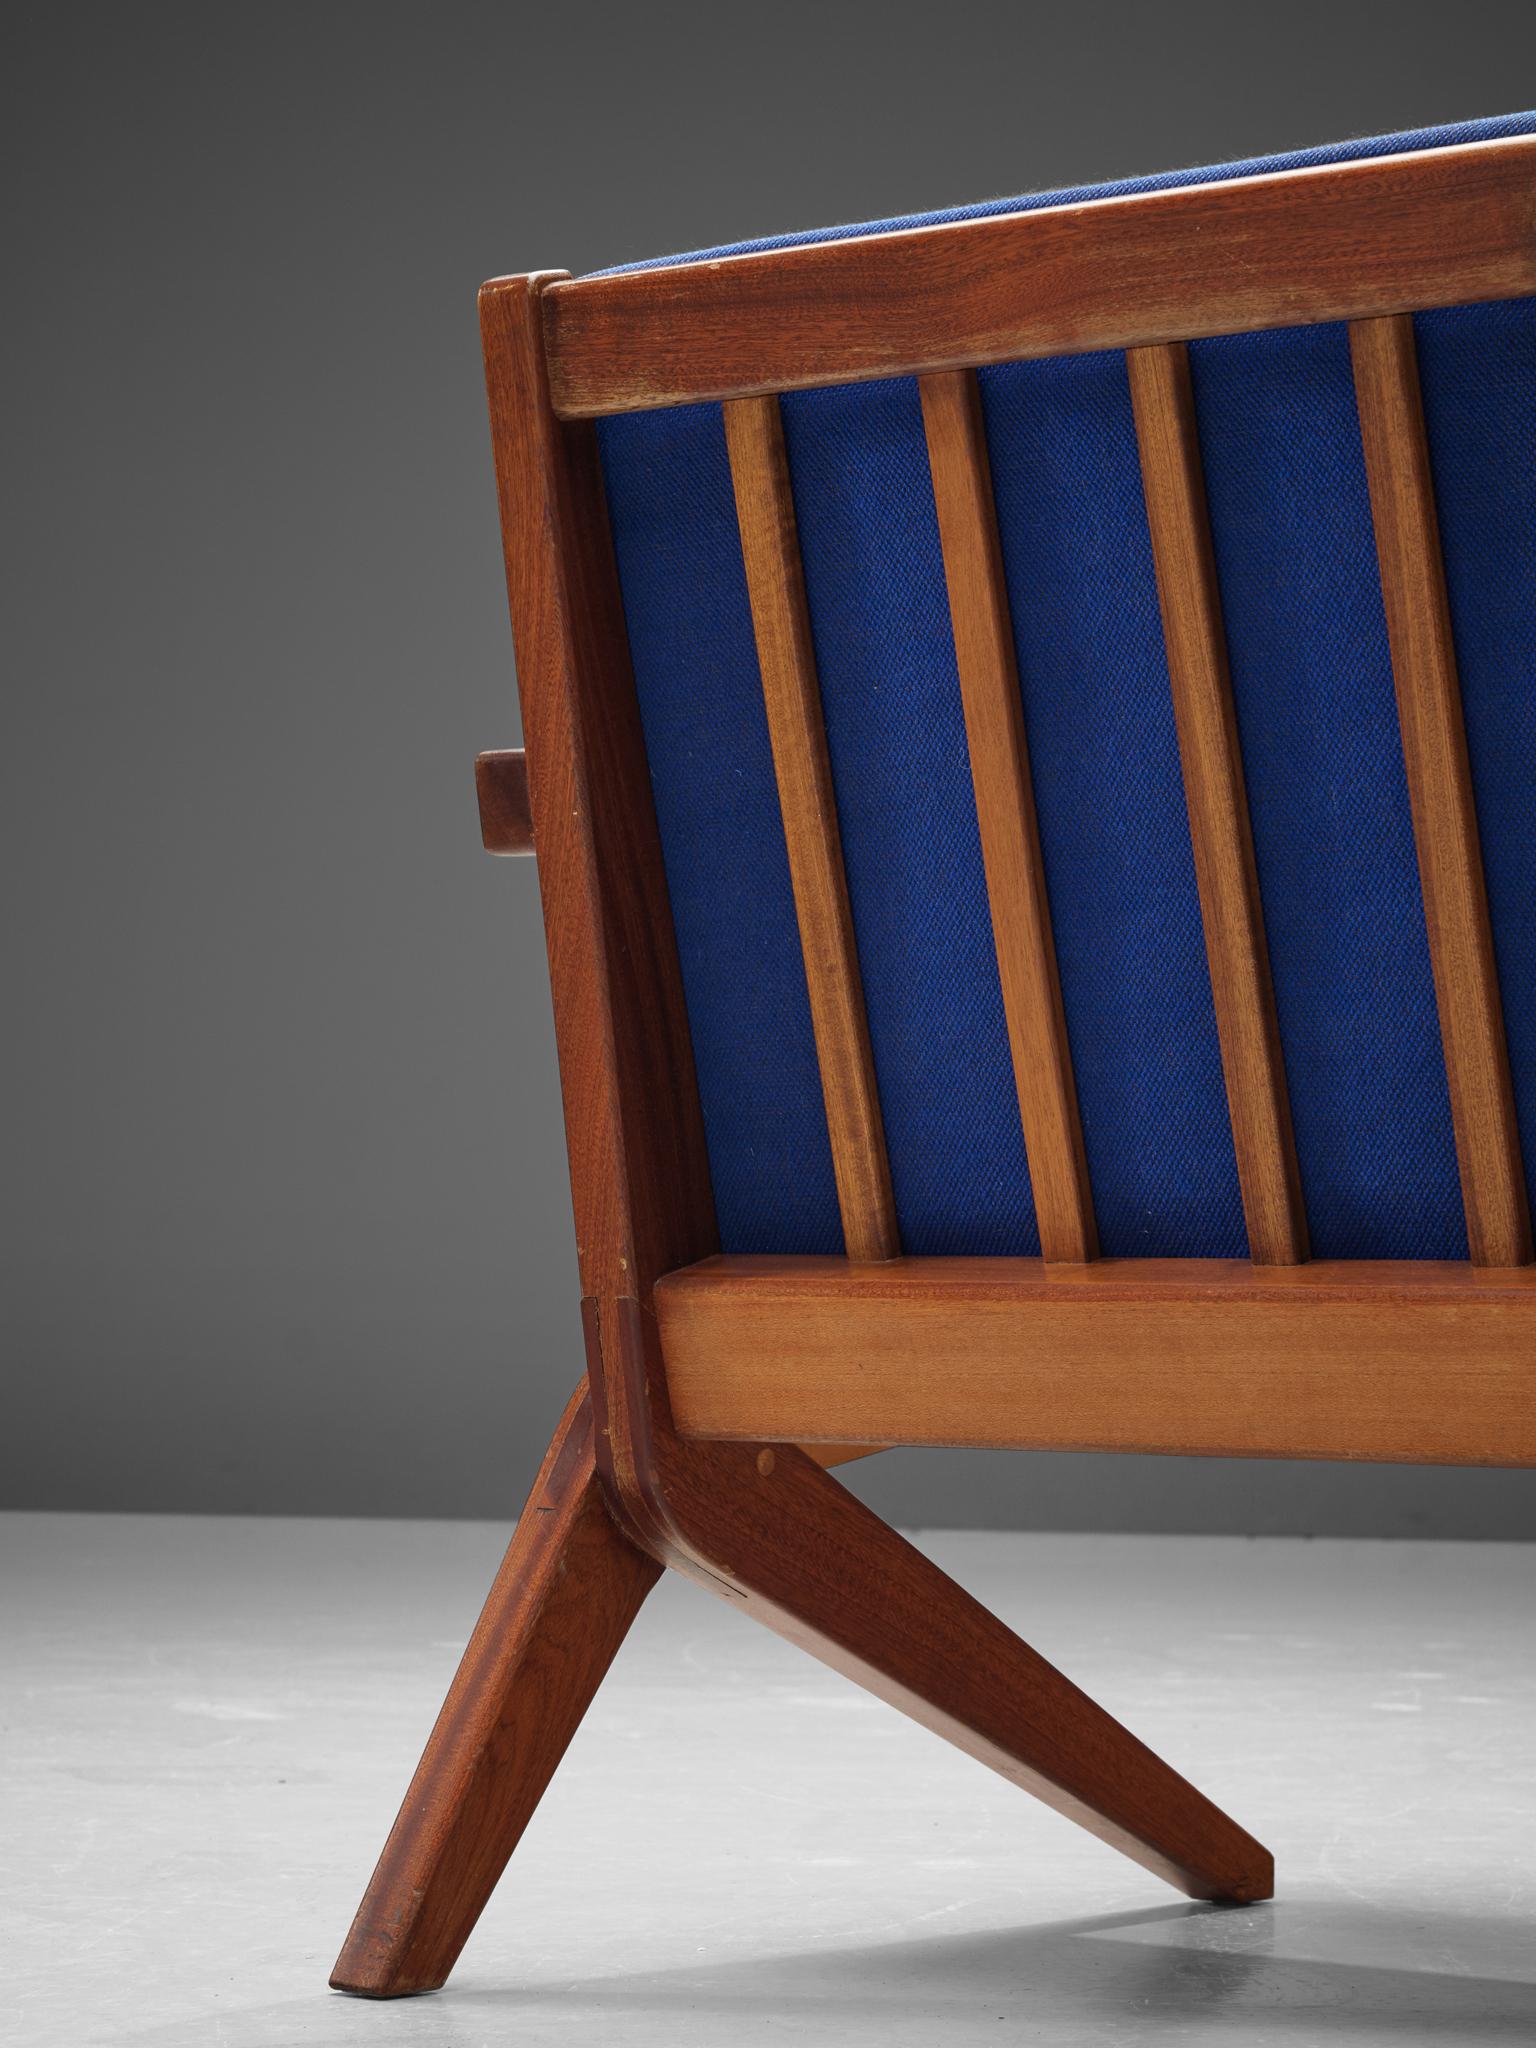 Scandinavian Modern Olavi Hanninen 'Boomerang' Chairs with Blue Upholstery